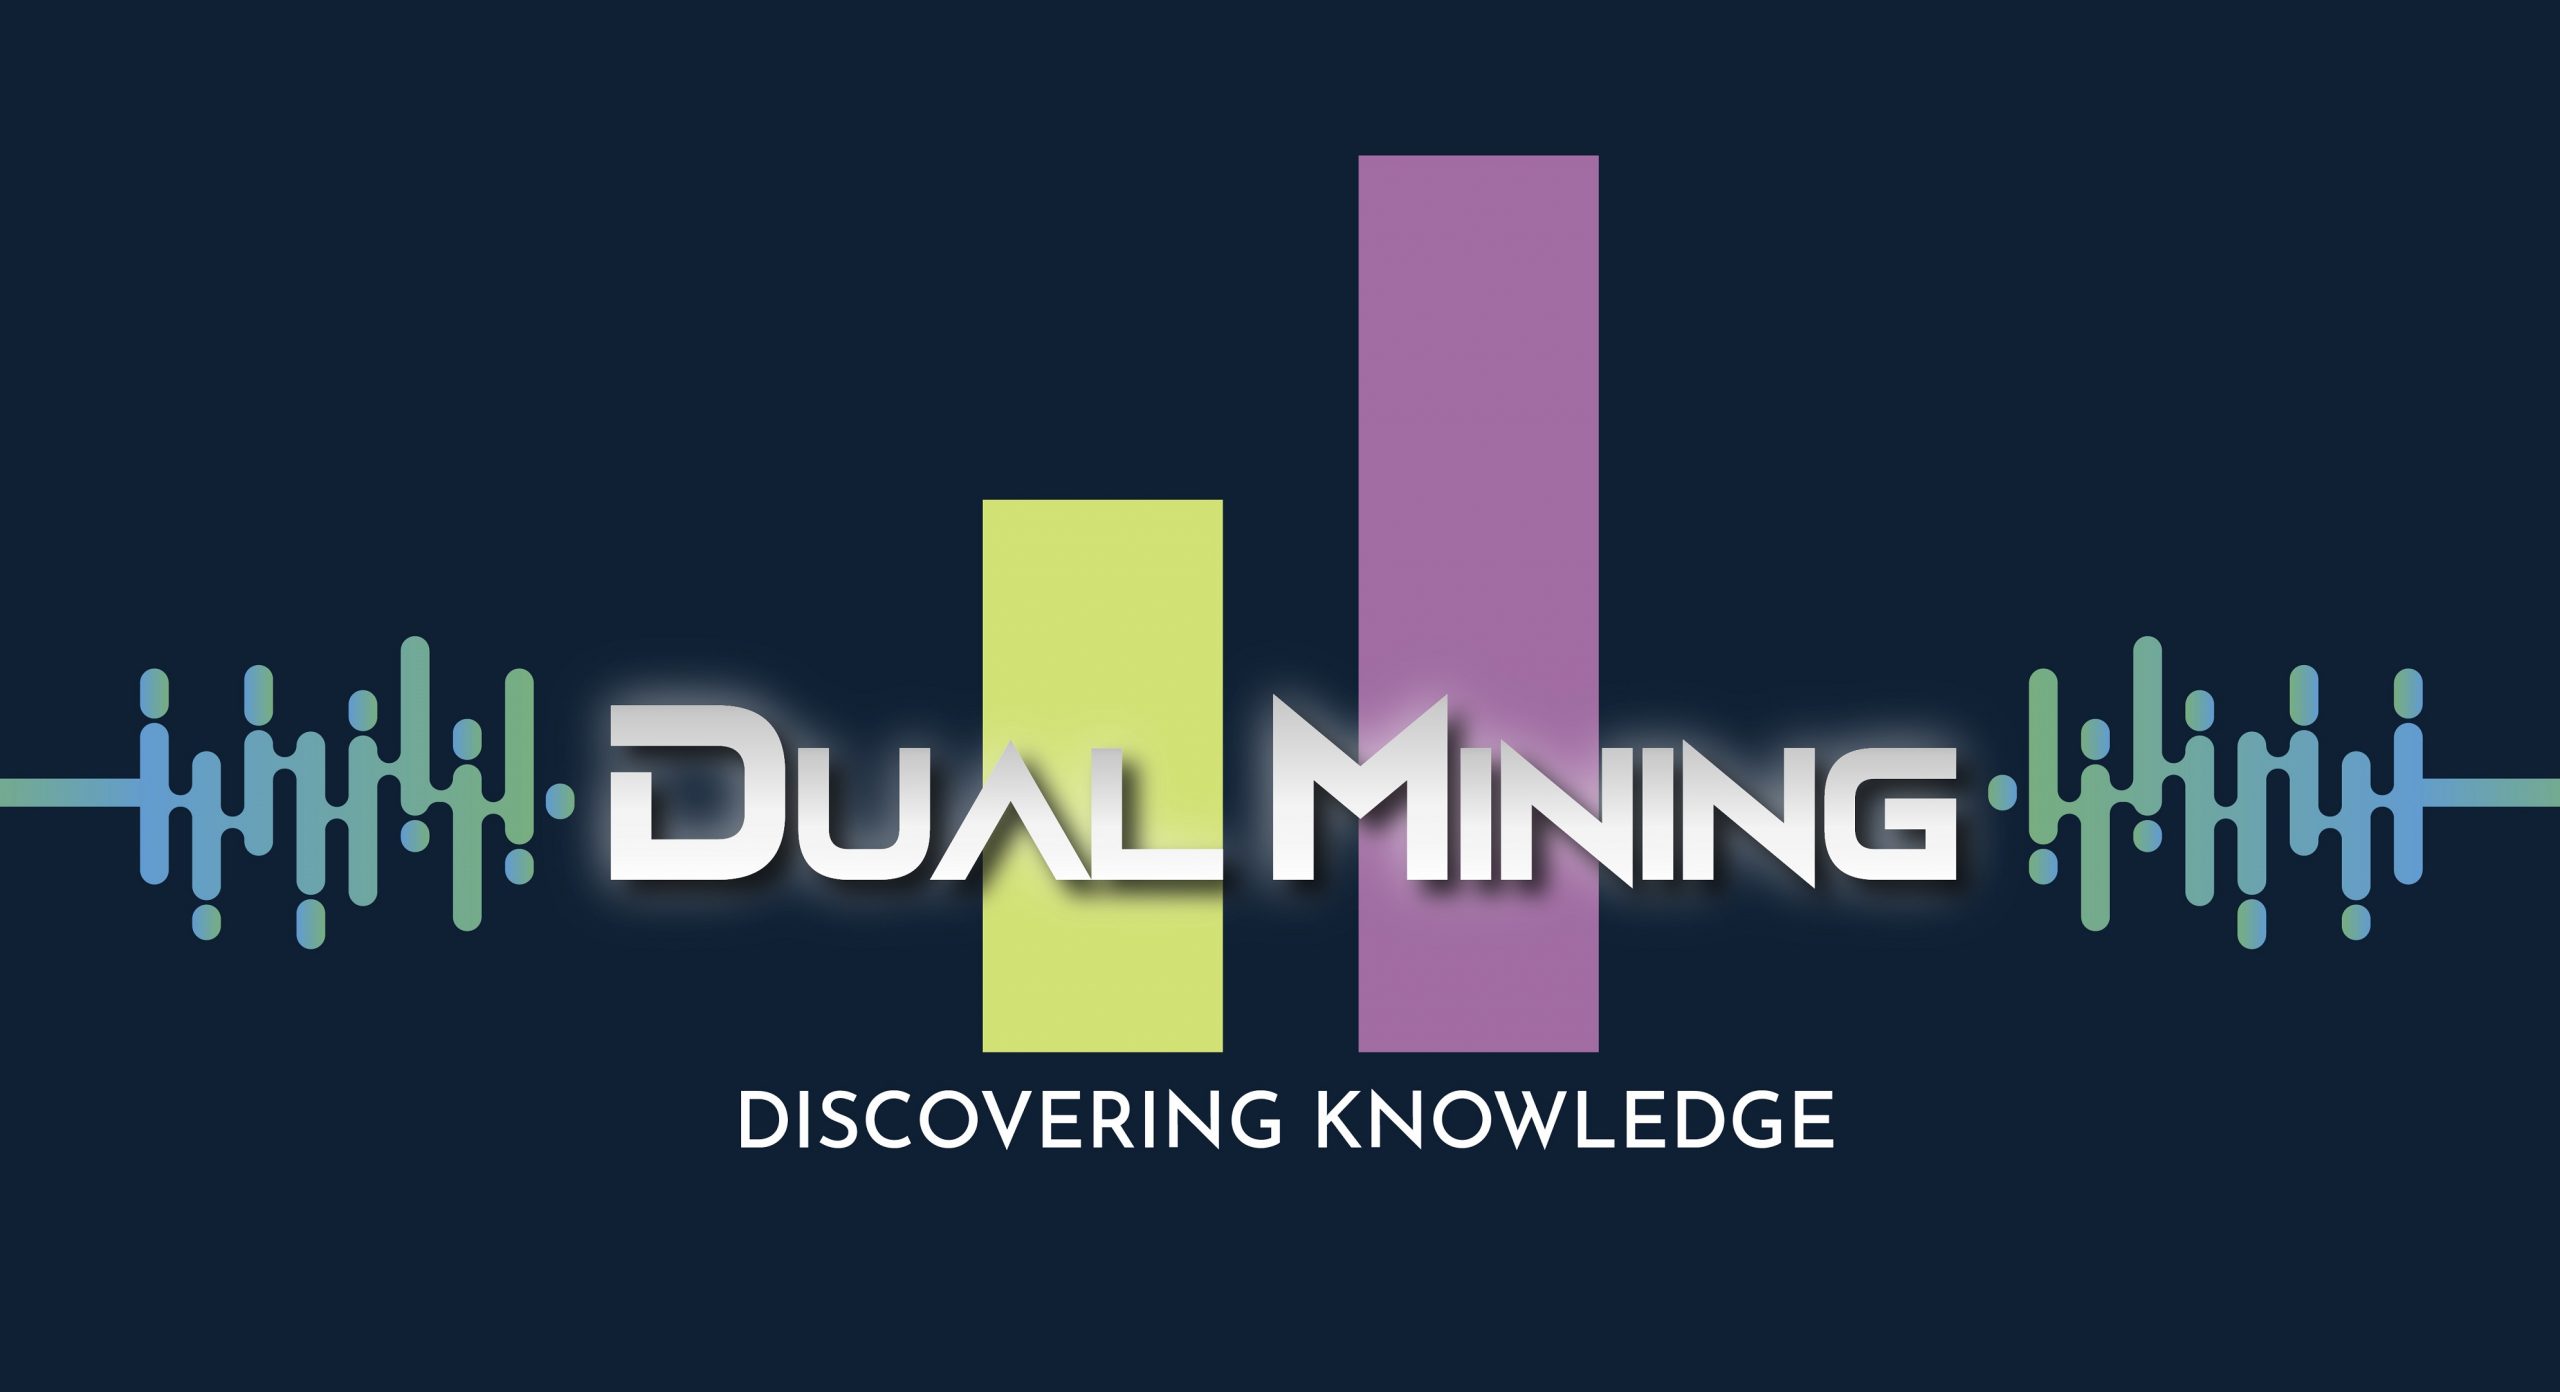 Dual Mining